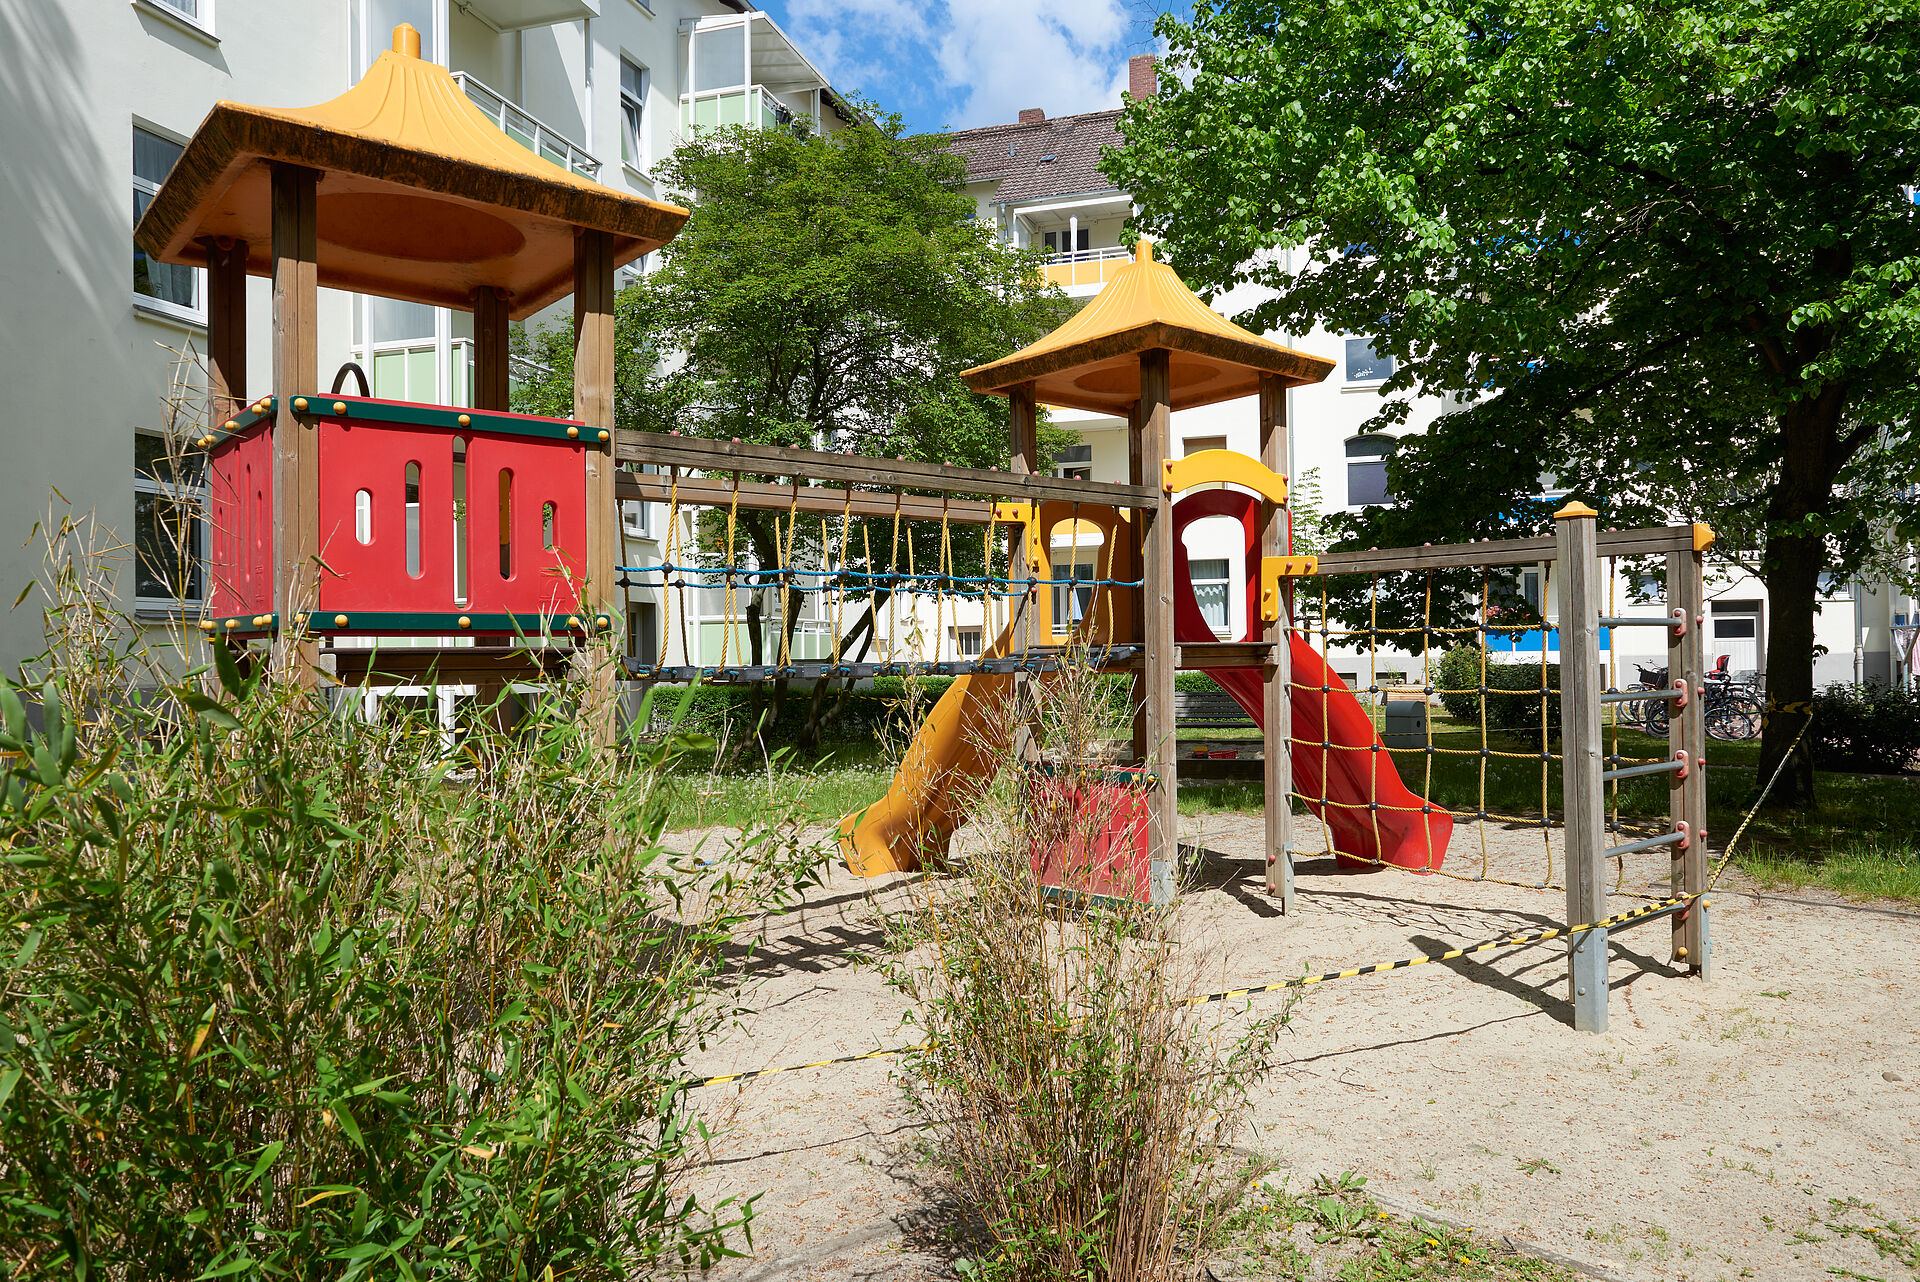 Spielplatz Innenhof Podbielski- / Klaus-Groth-Straße